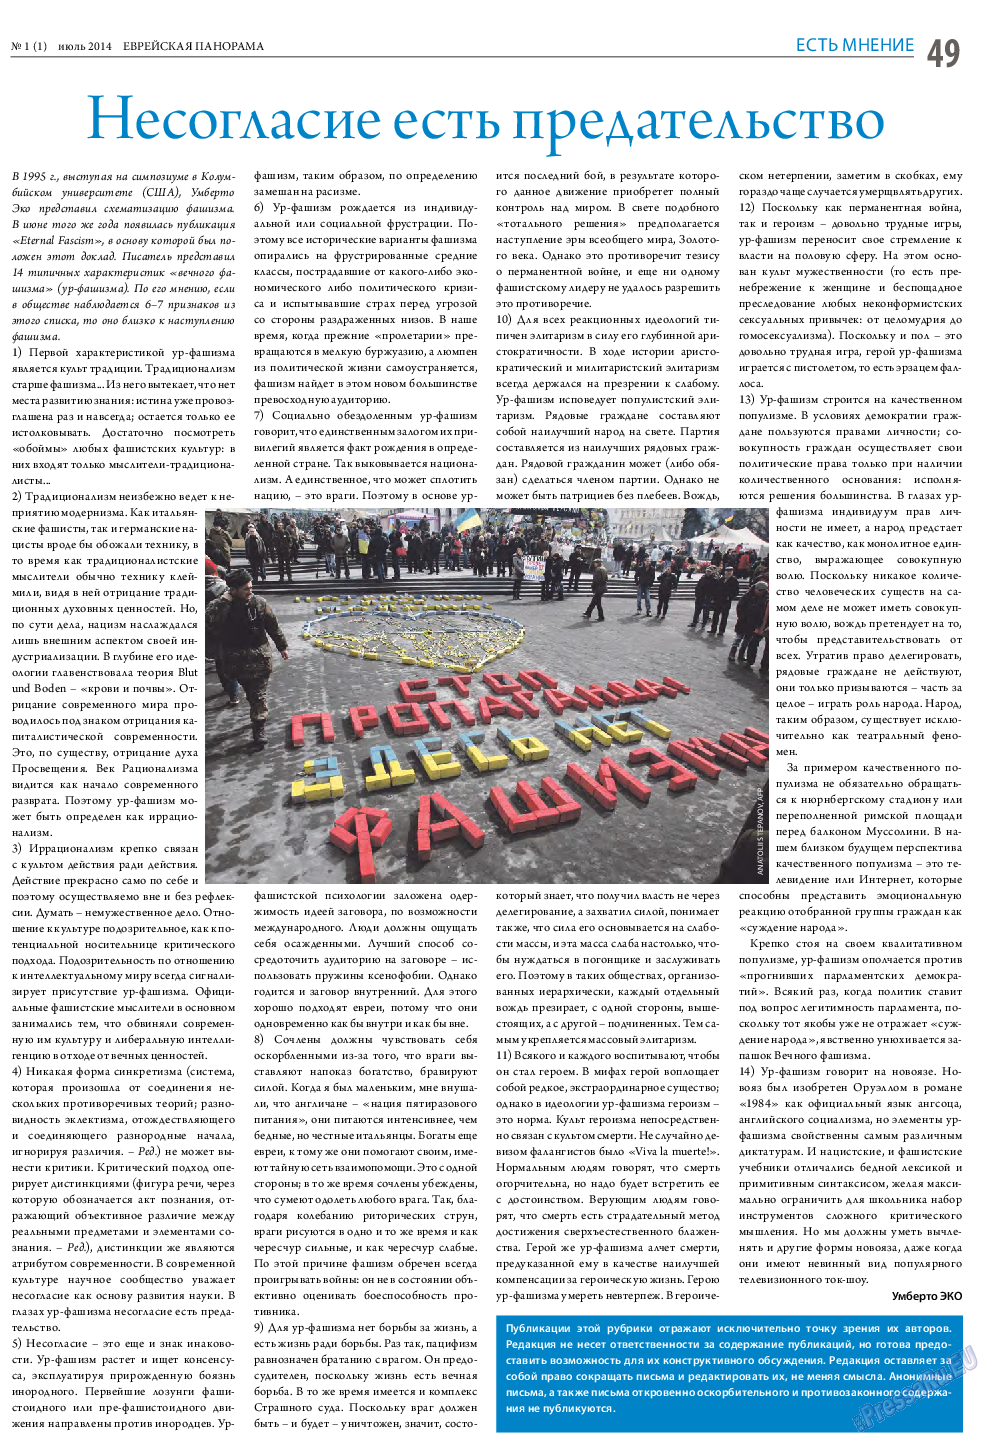 Еврейская панорама, газета. 2014 №1 стр.49